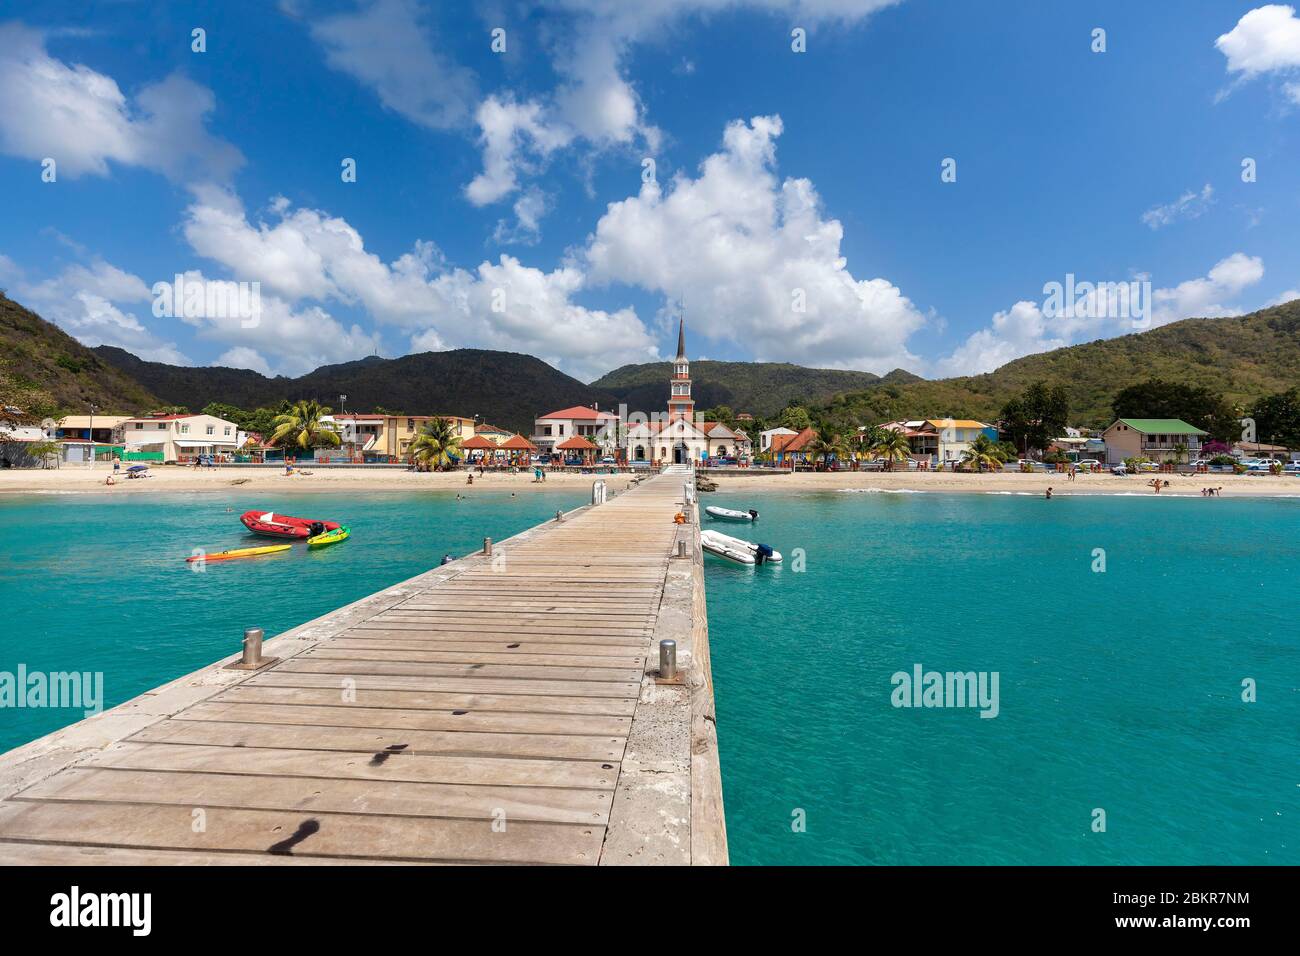 France, Martinique, les Anses d'Arlet, Grande Anse city, Saint Henri Church and the wooden dock Stock Photo